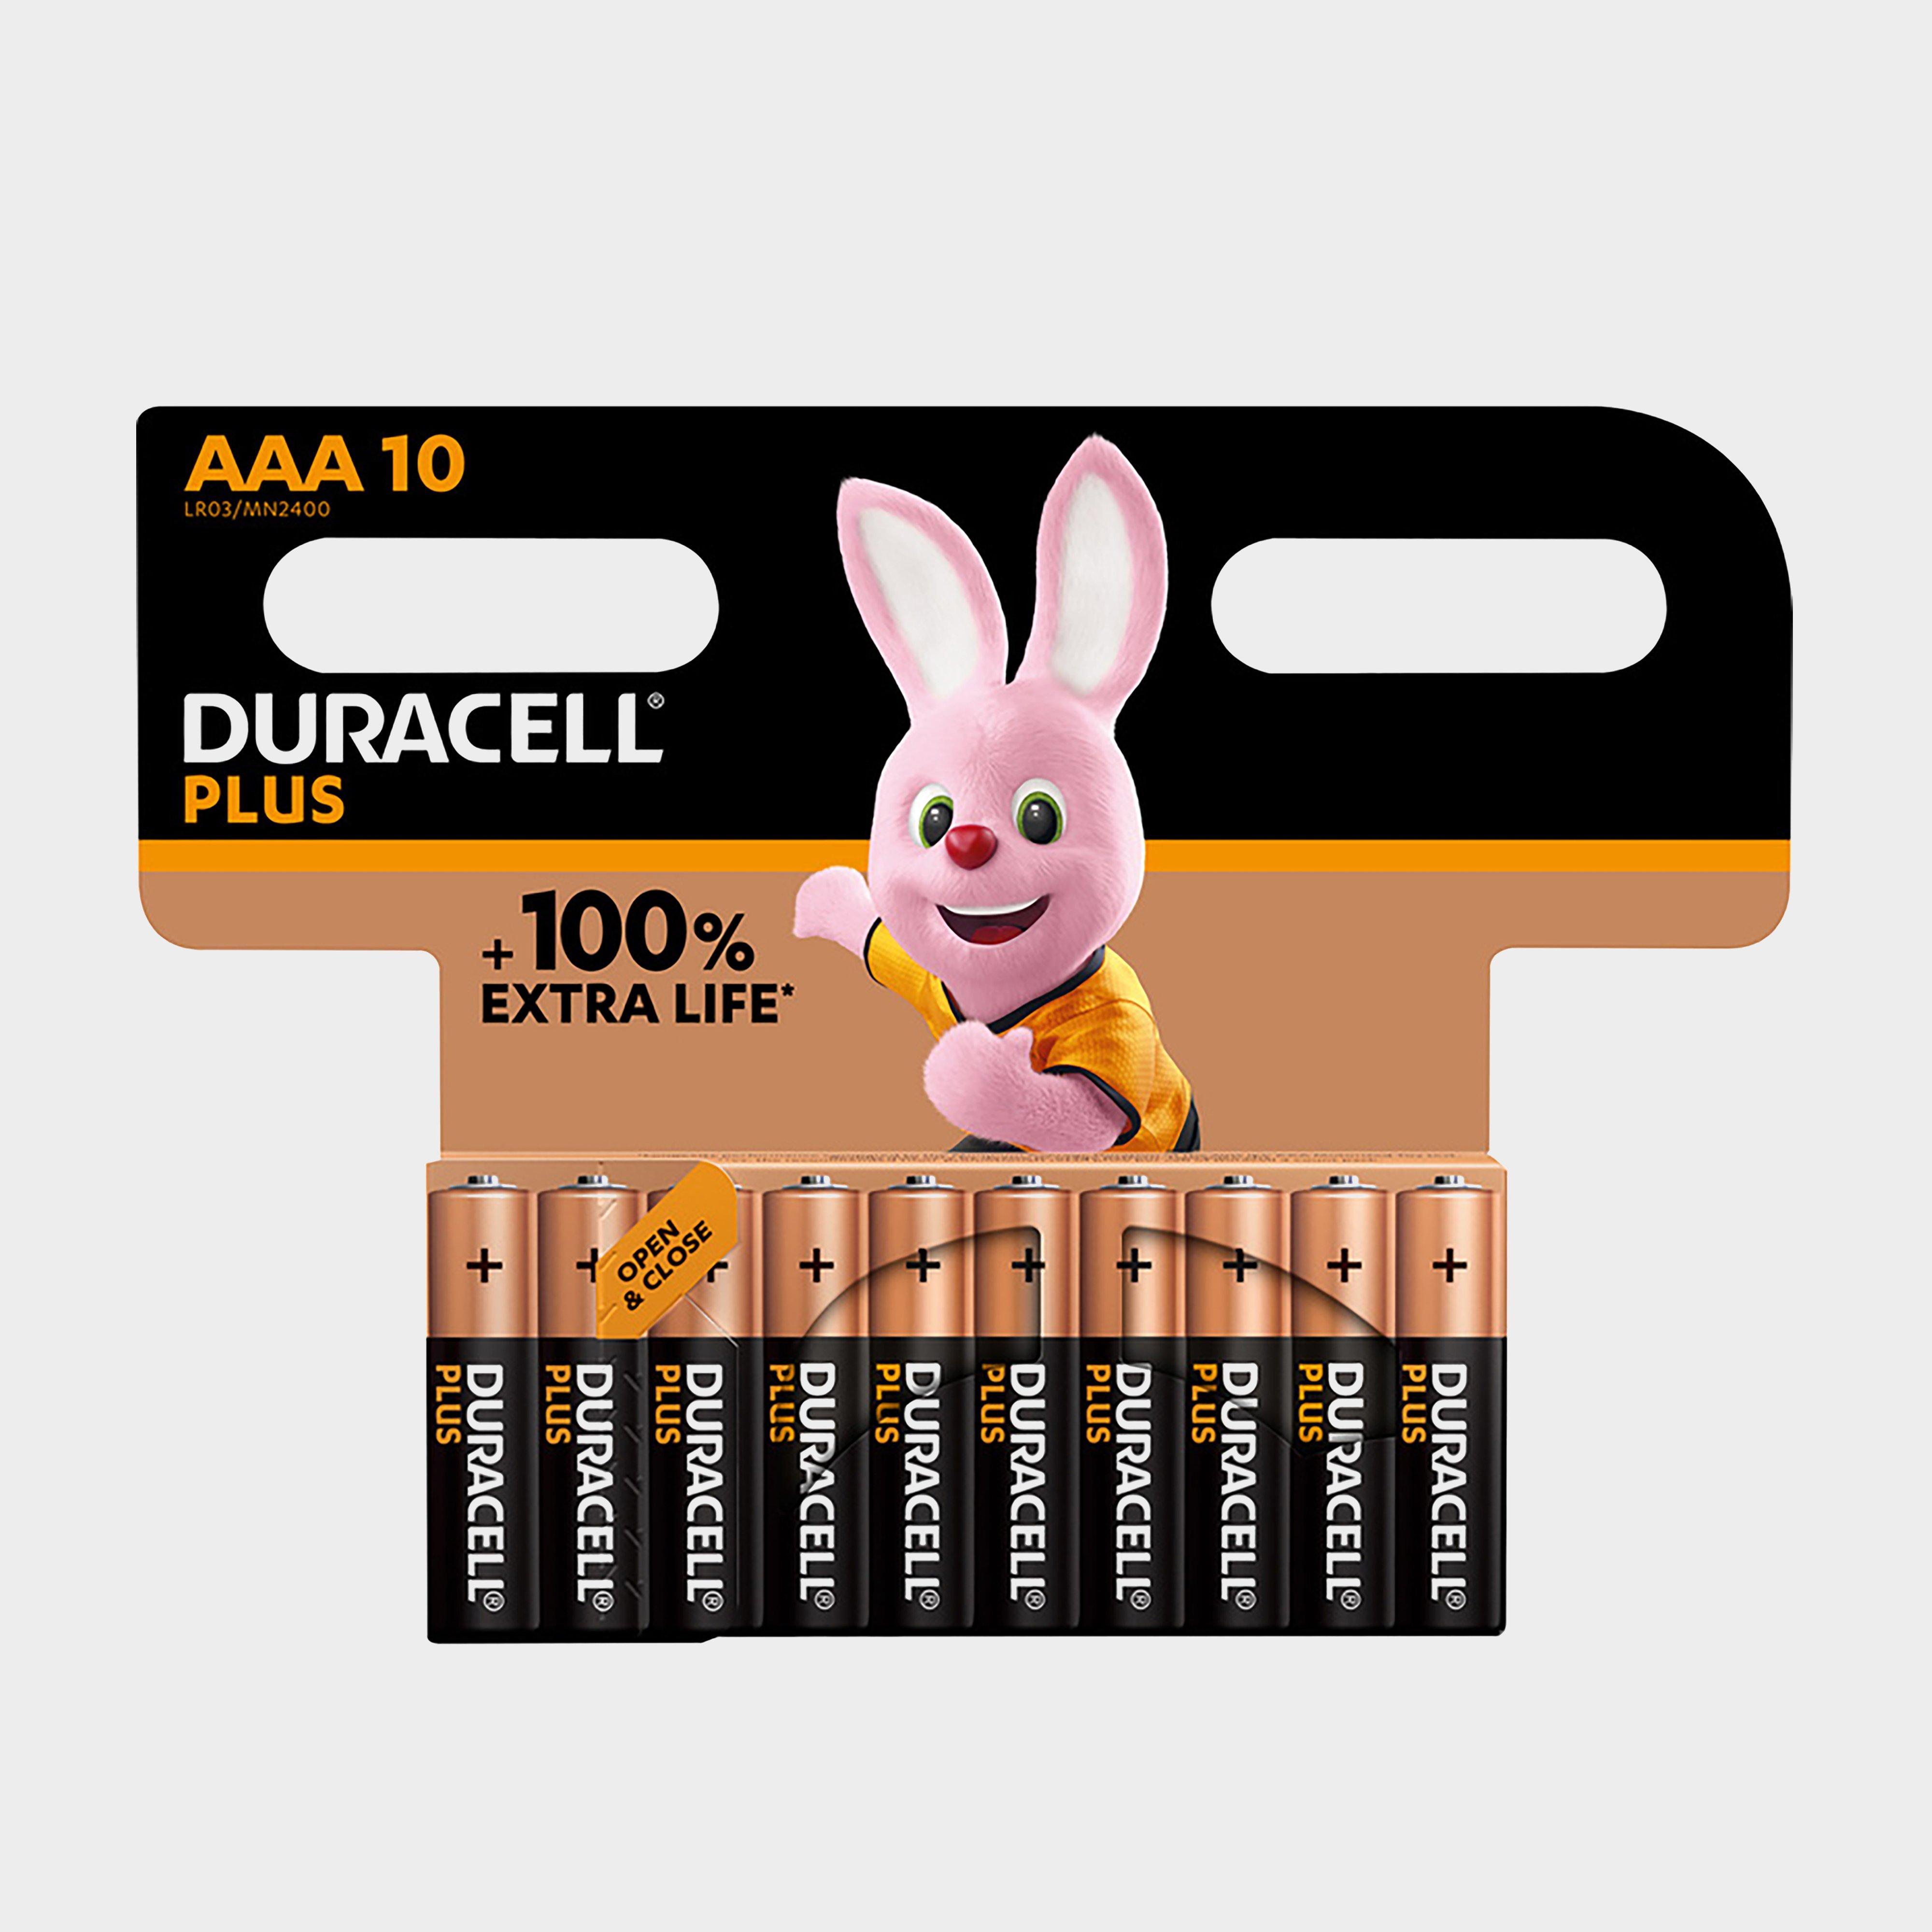 Duracell Aaa Plus Batteries (Pack Of 10) - Black, Black